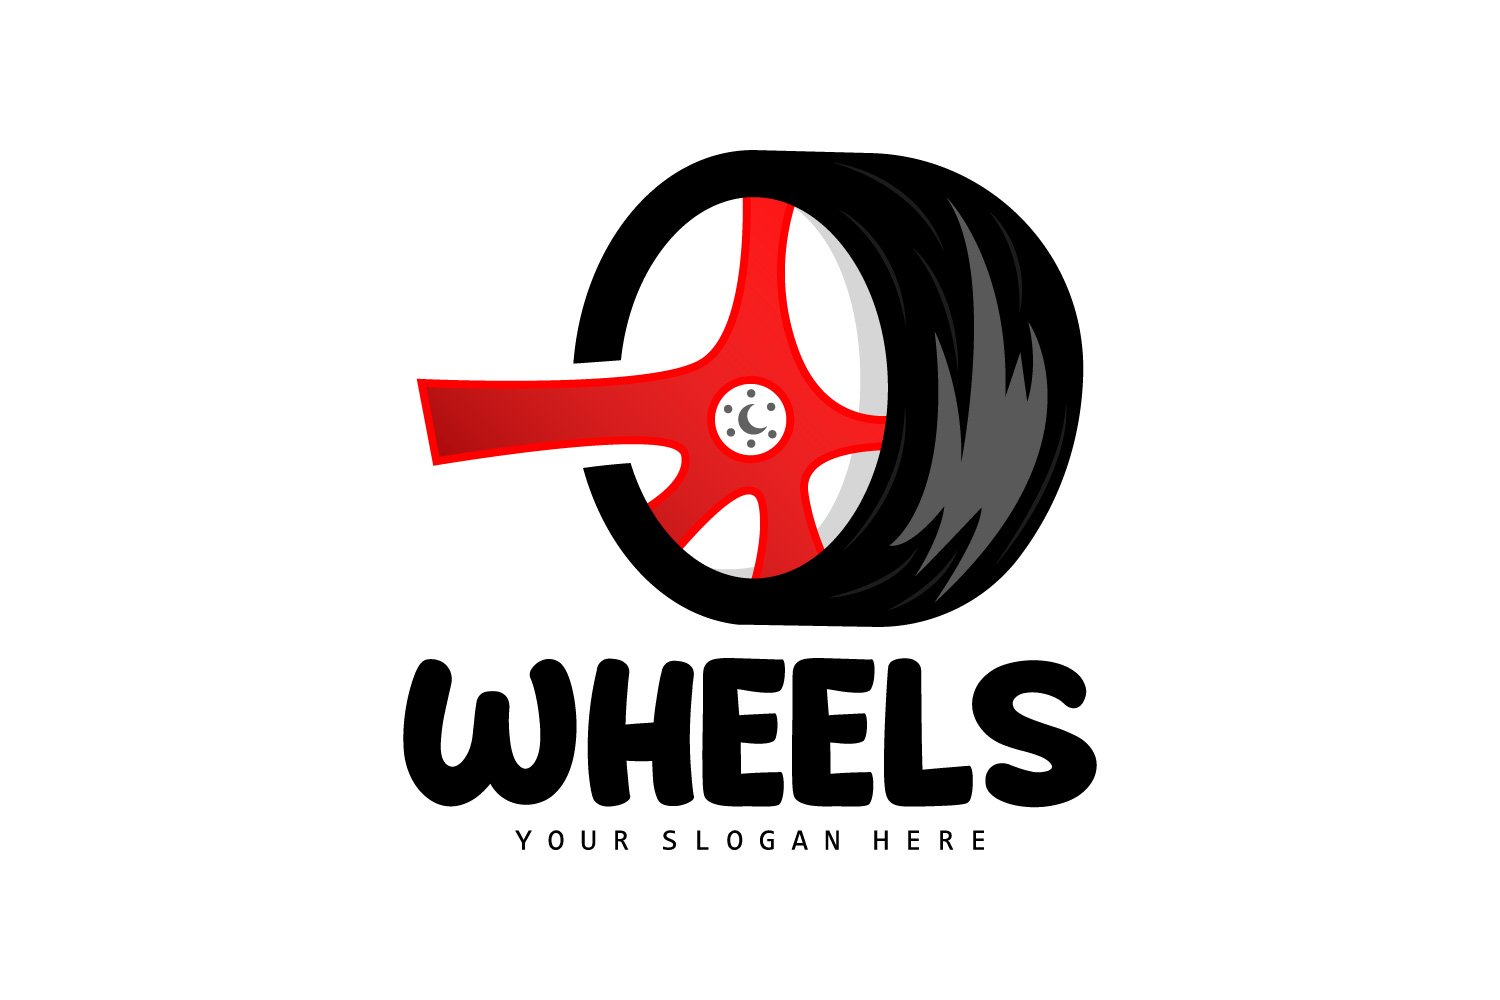 Vehicle Wheel Service Logo Automotive DesignV11